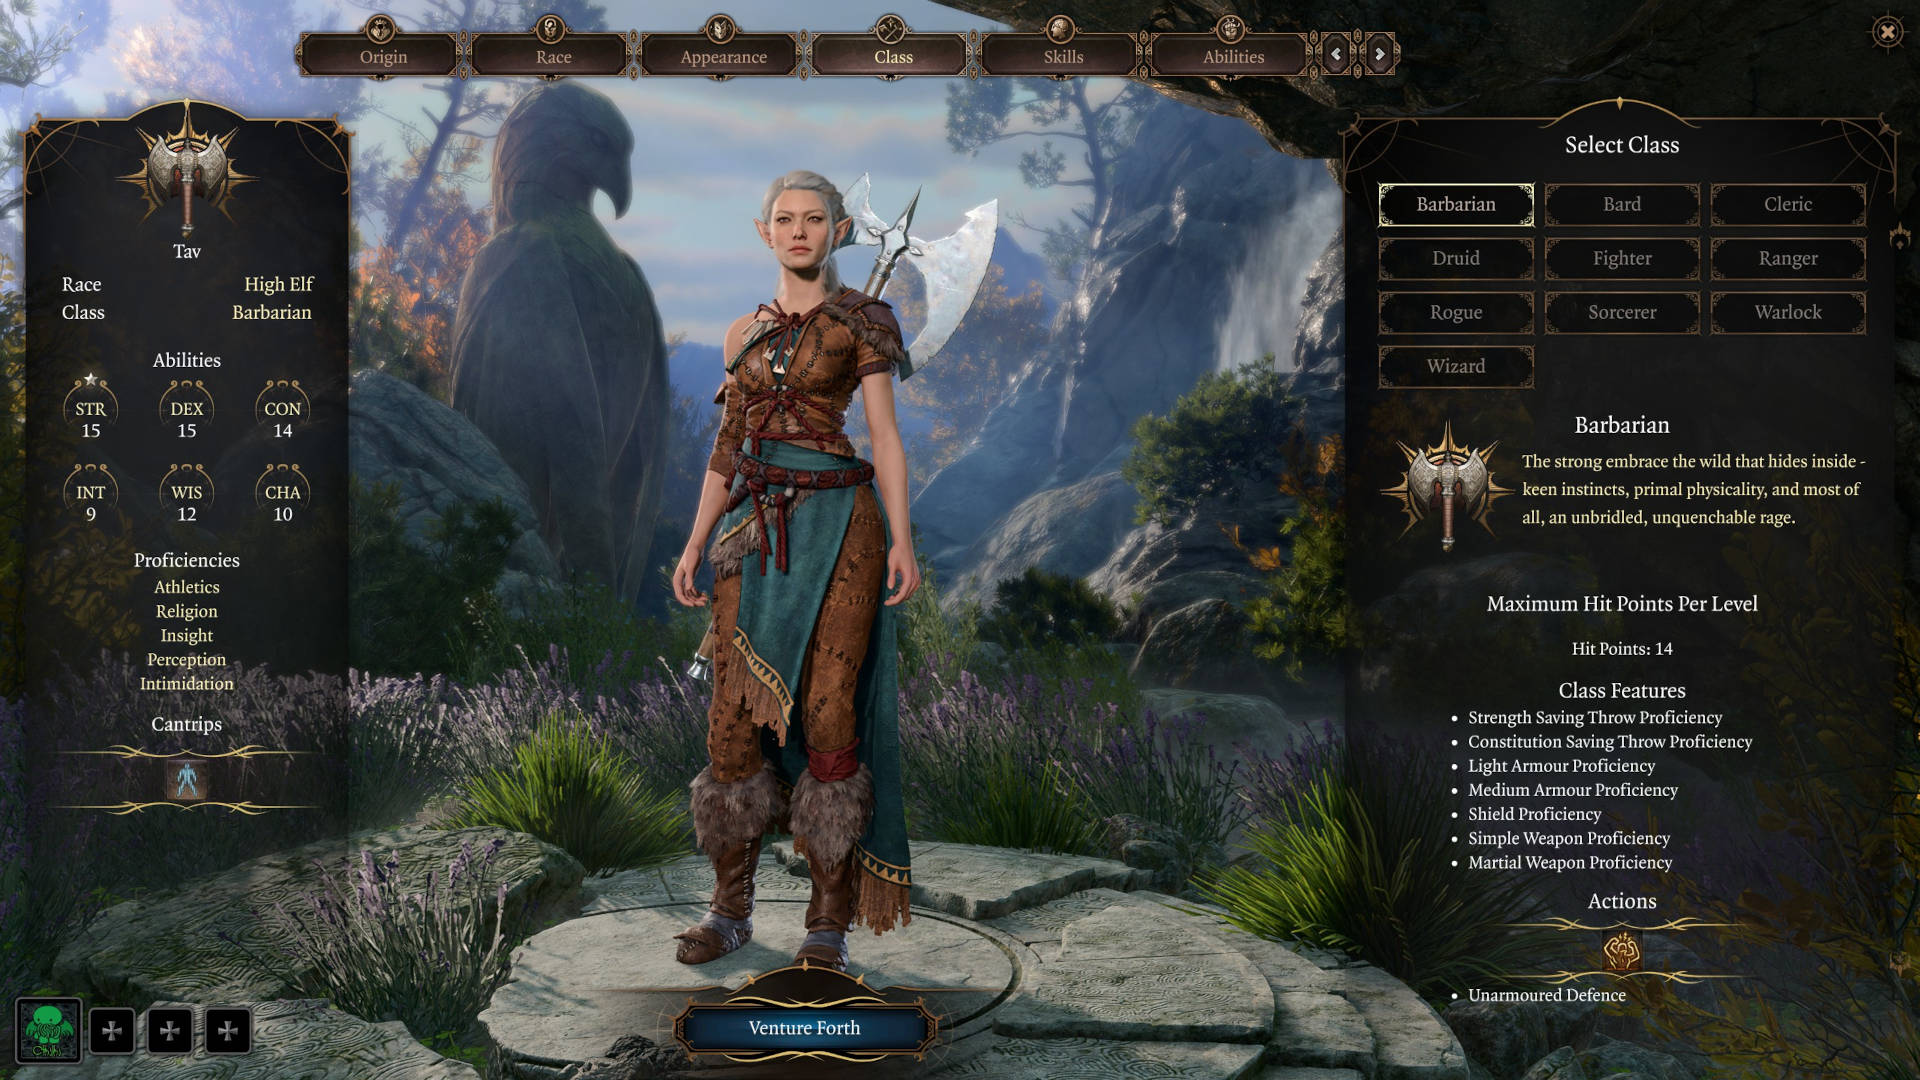 Baldur's Gate 3 classes: a High-Elf Barbarian on the character creation screen.